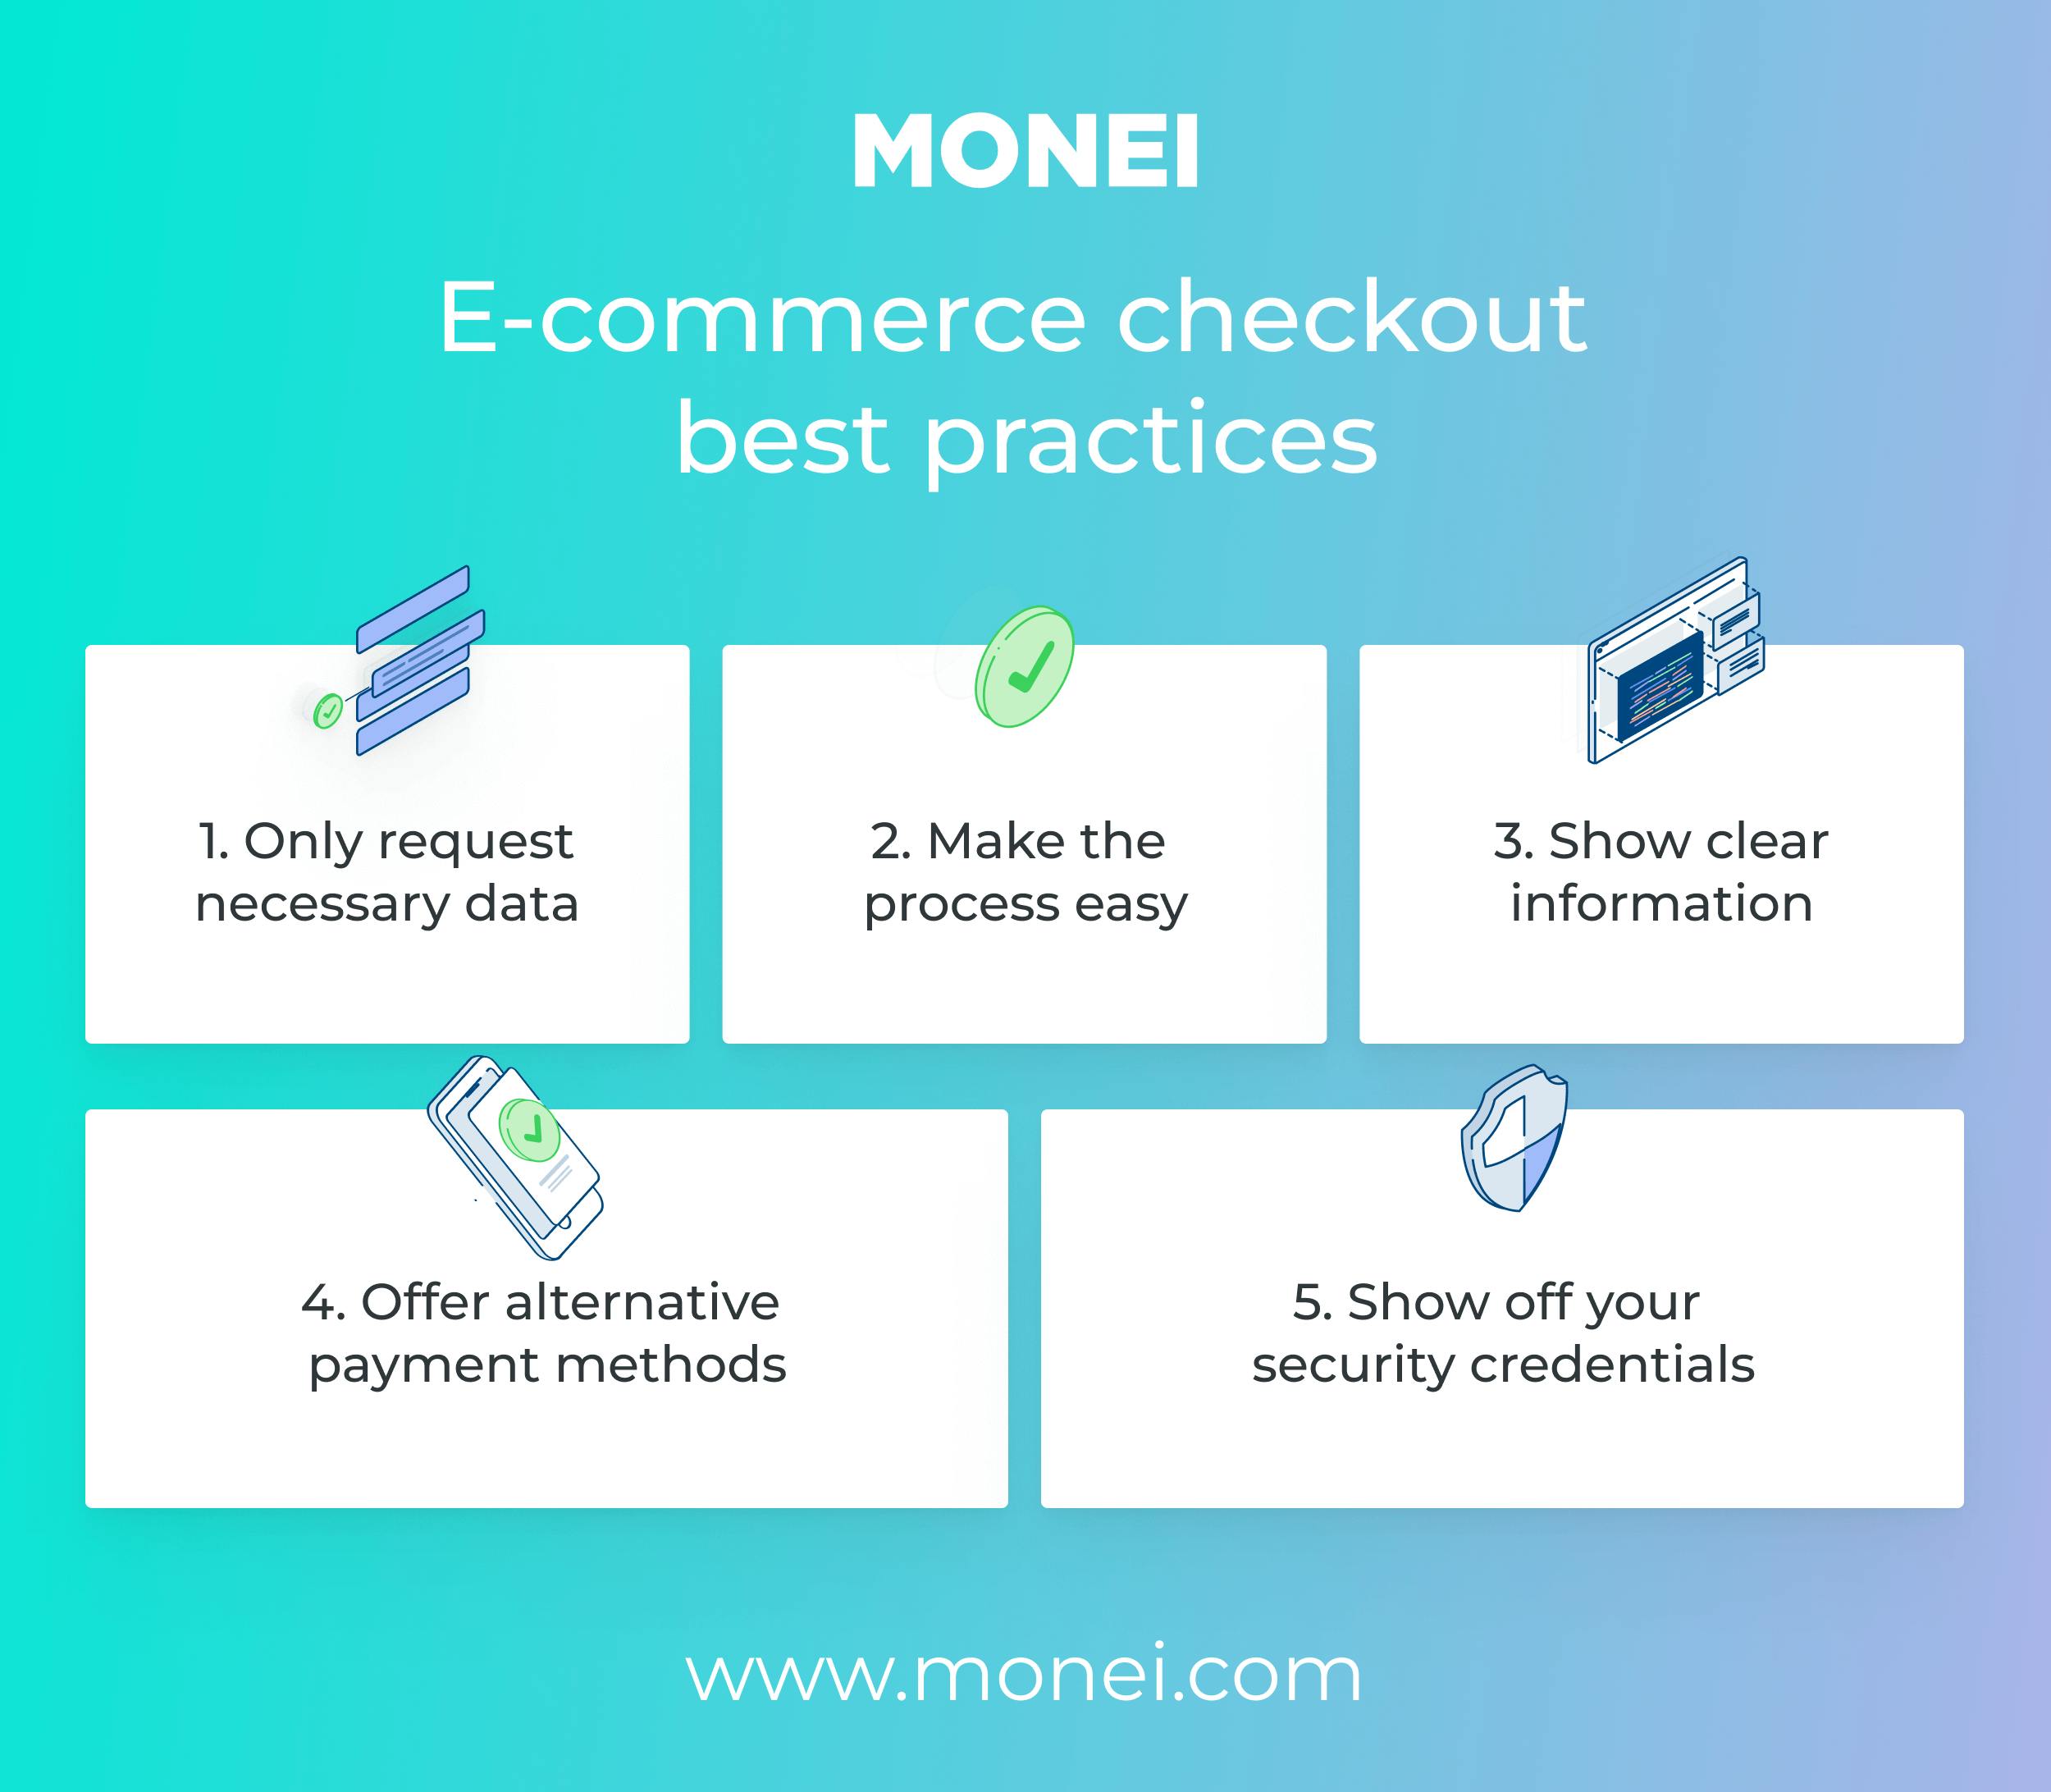 An infographic explaining 5 e-commerce checkout best practices